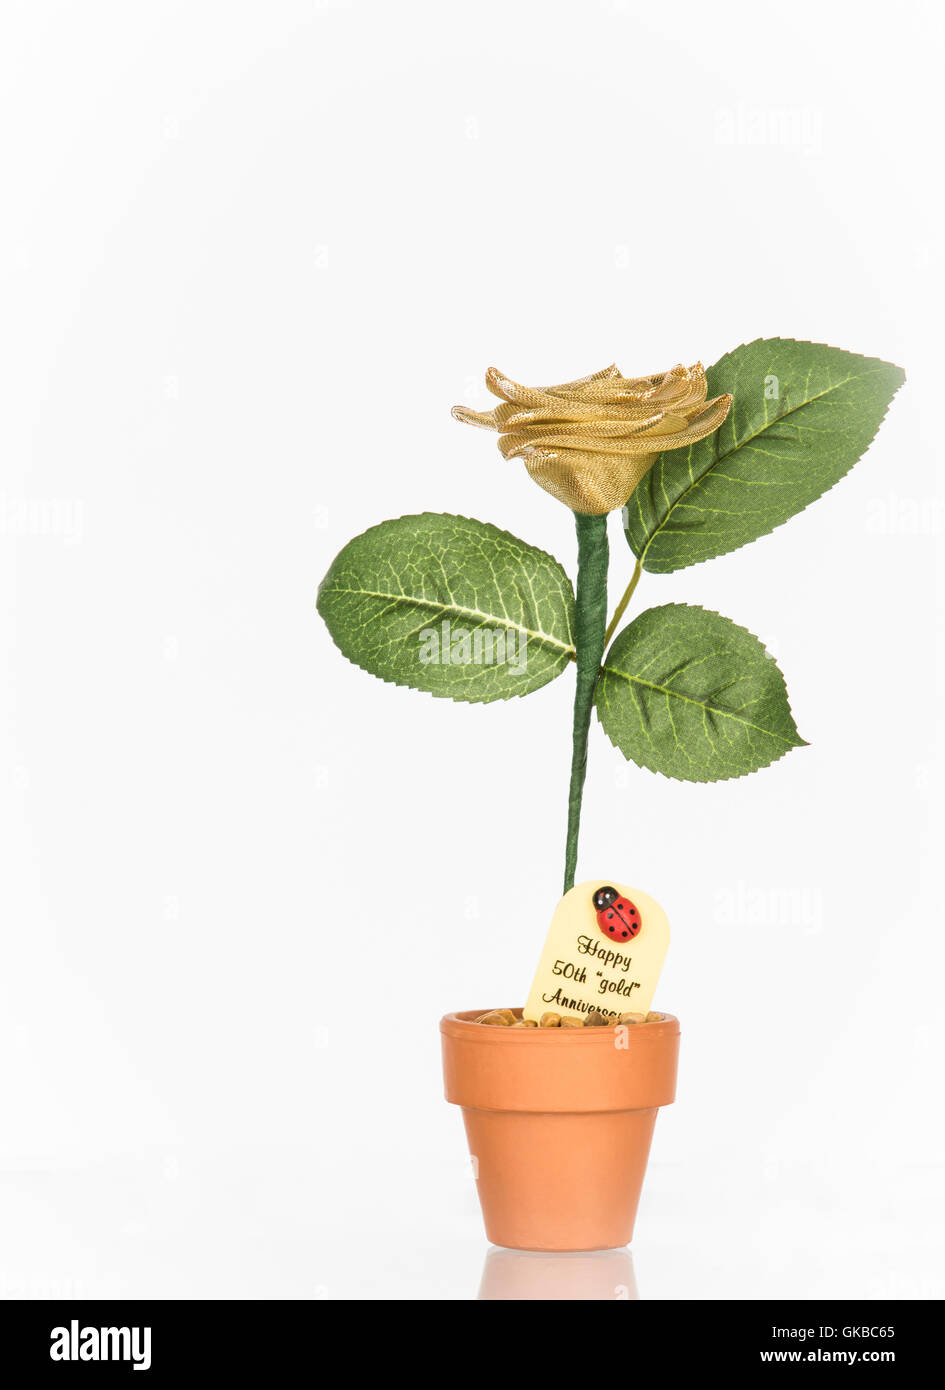 Golden Anniversary flower - 'Felice cinquantesimo 'oro' anniversario' Foto Stock